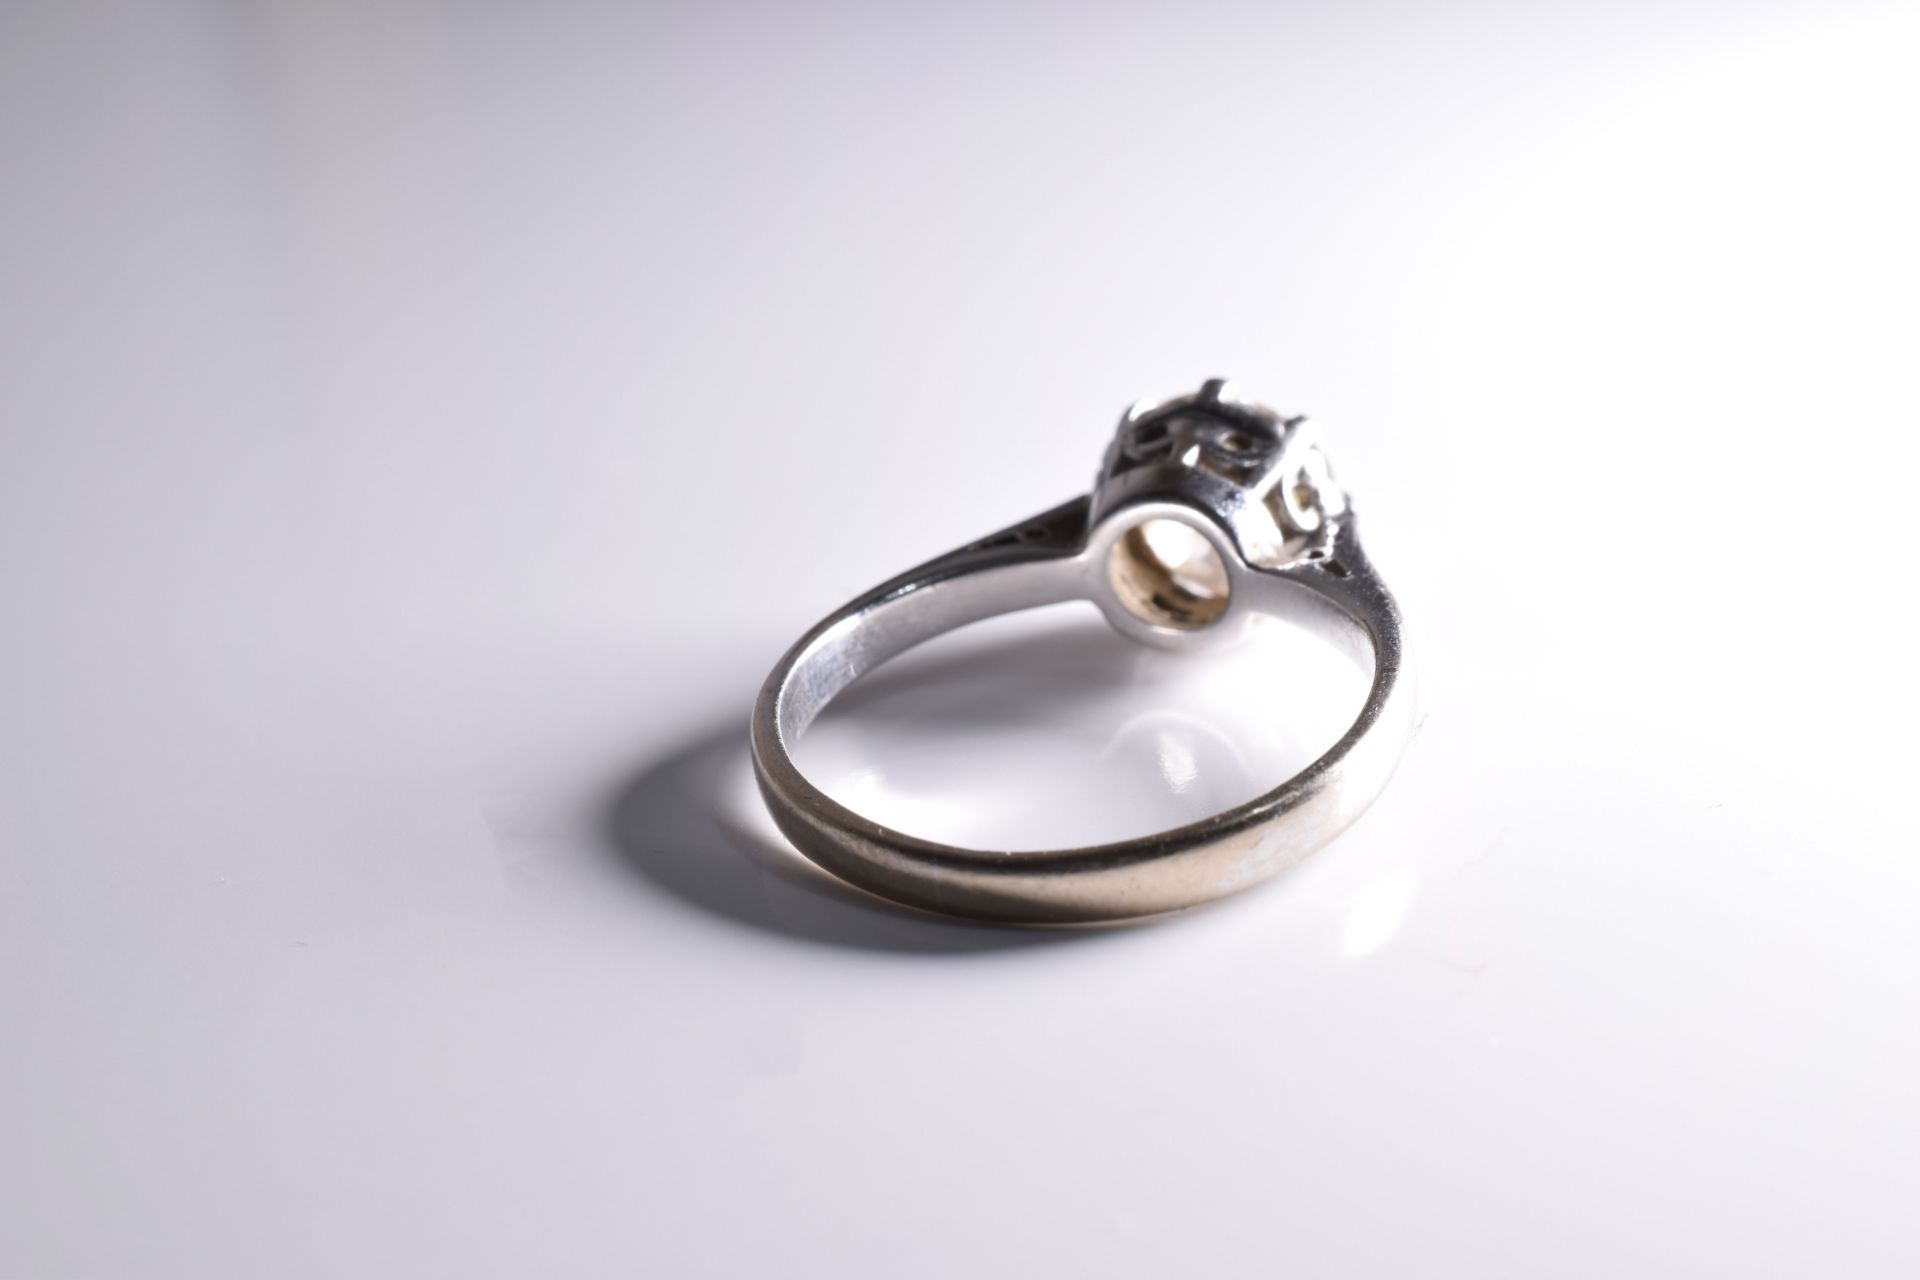 1.5 Carat Diamond Engagement Ring - Image 3 of 5